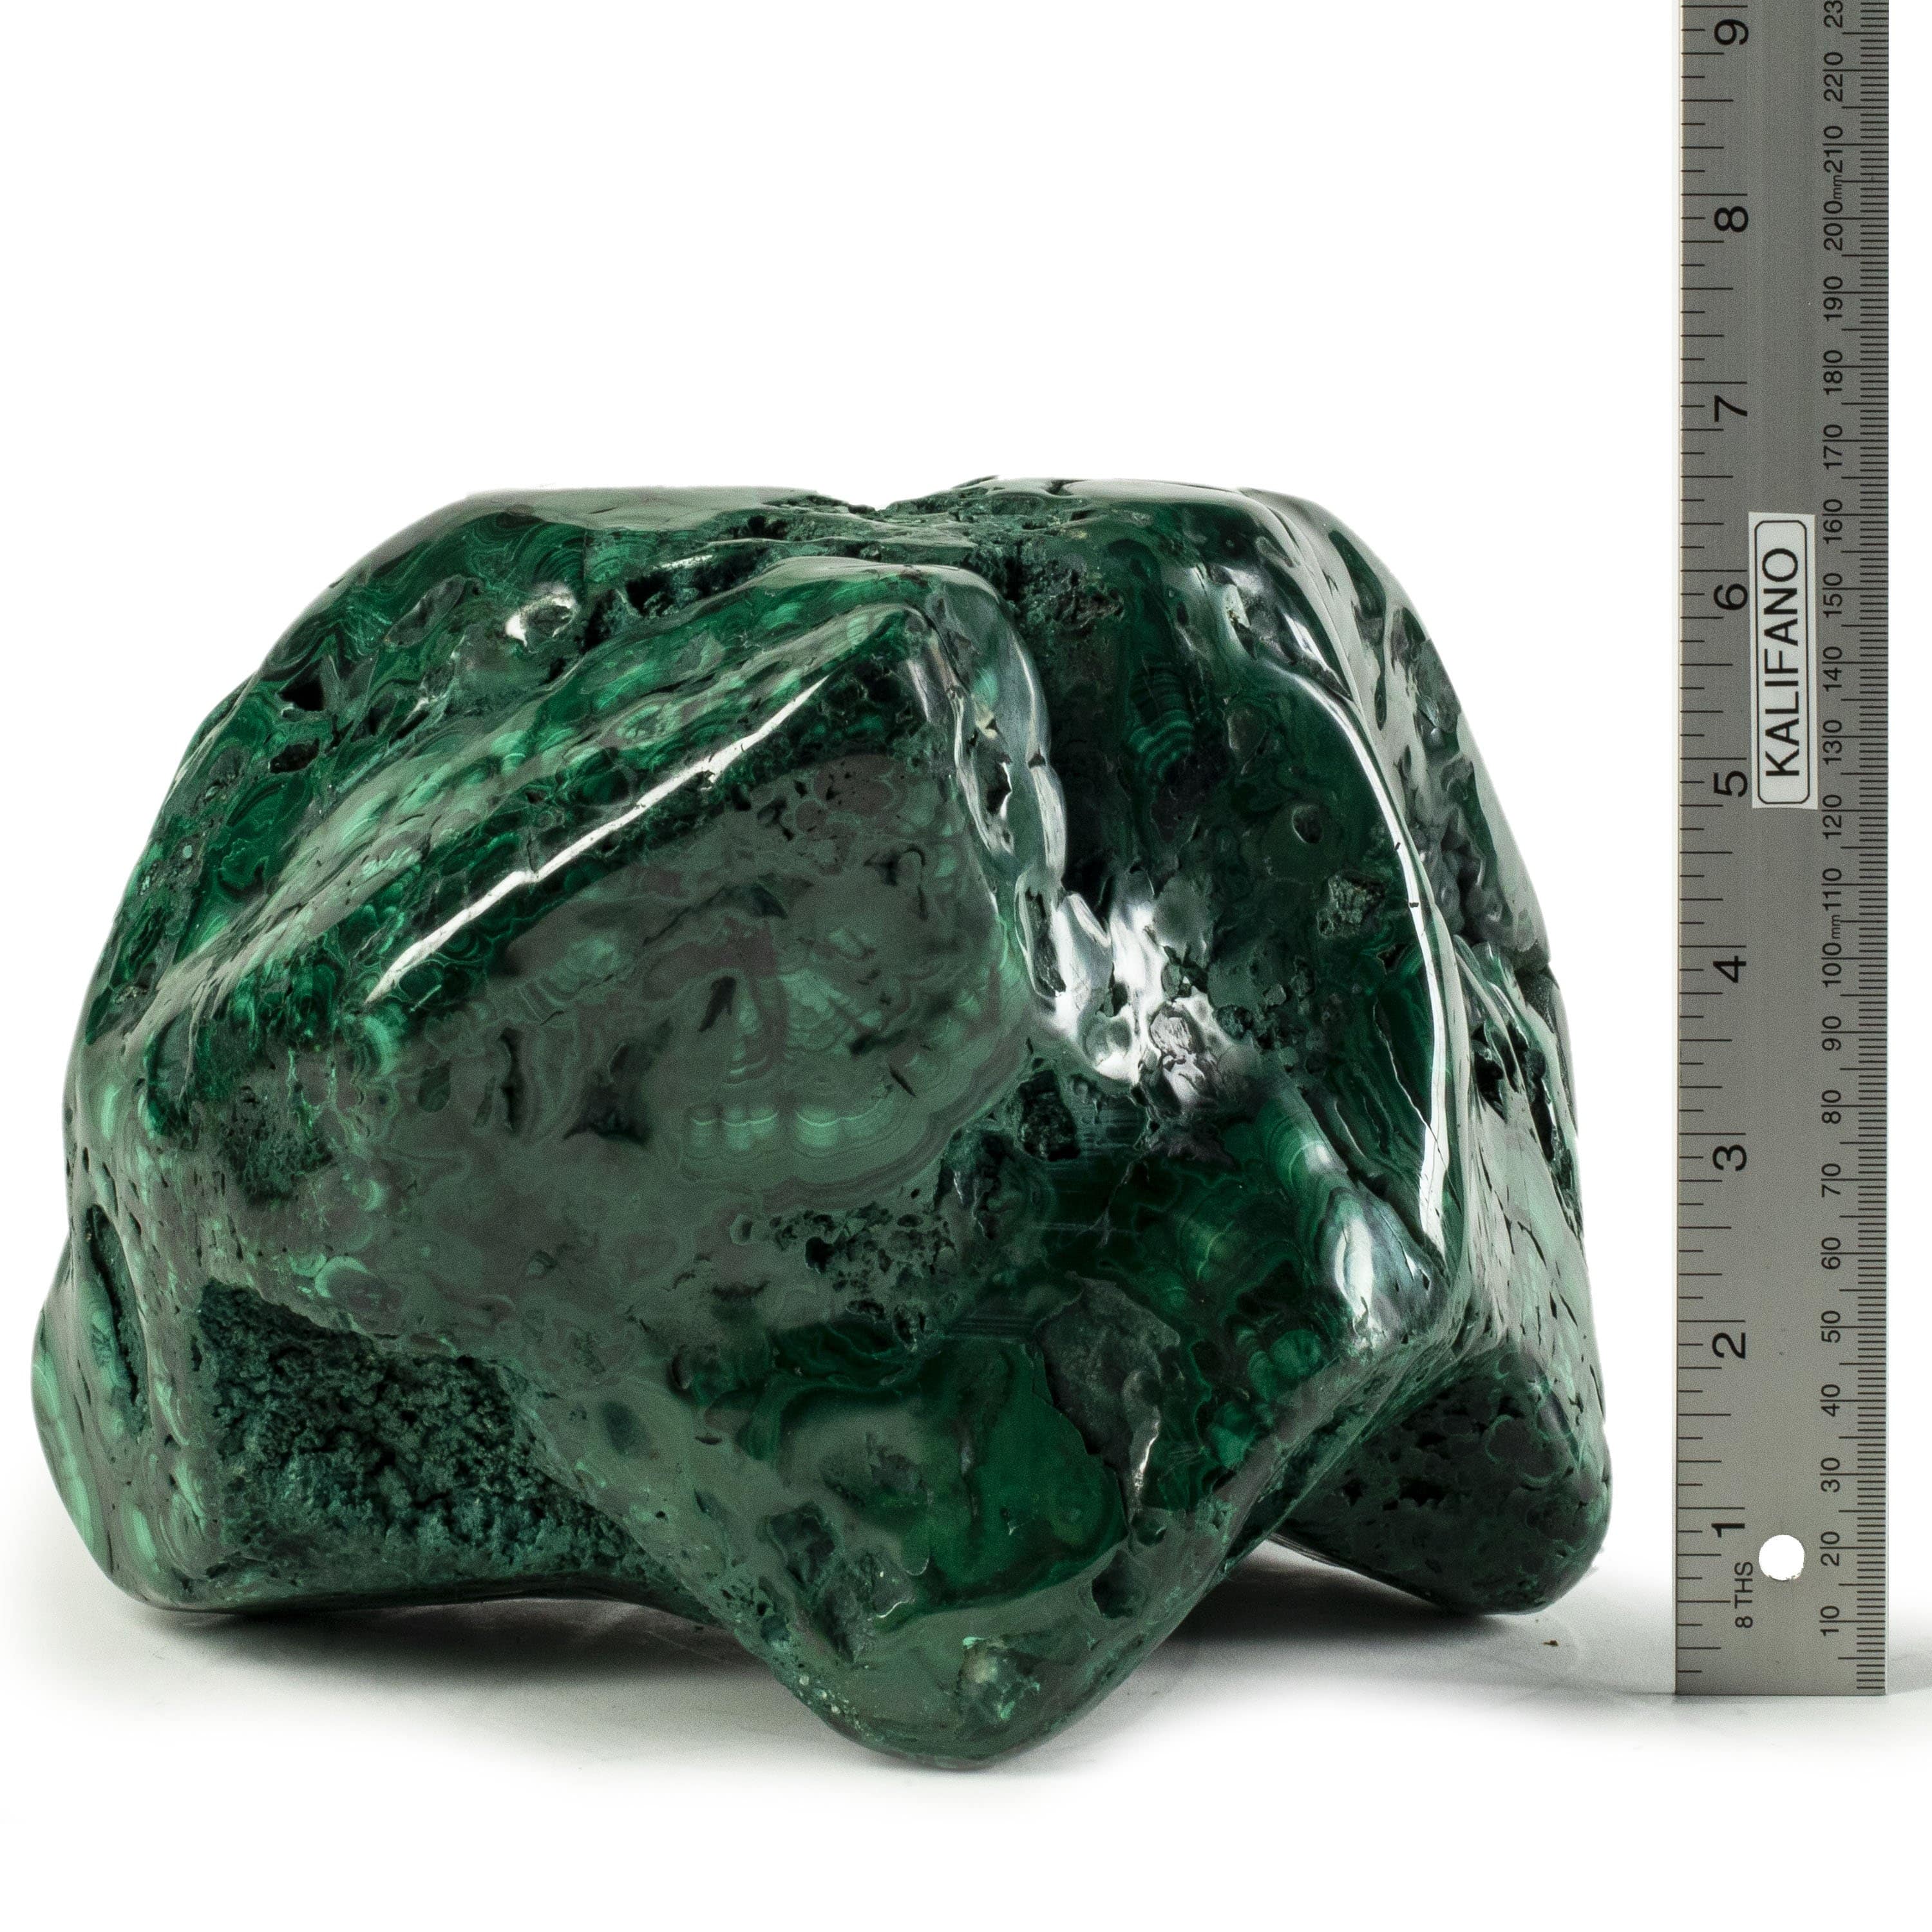 Kalifano Malachite Rare Natural Green Malachite Polished Freeform Specimen from Congo - 13.3 kg / 29.2 lbs MA9000.002